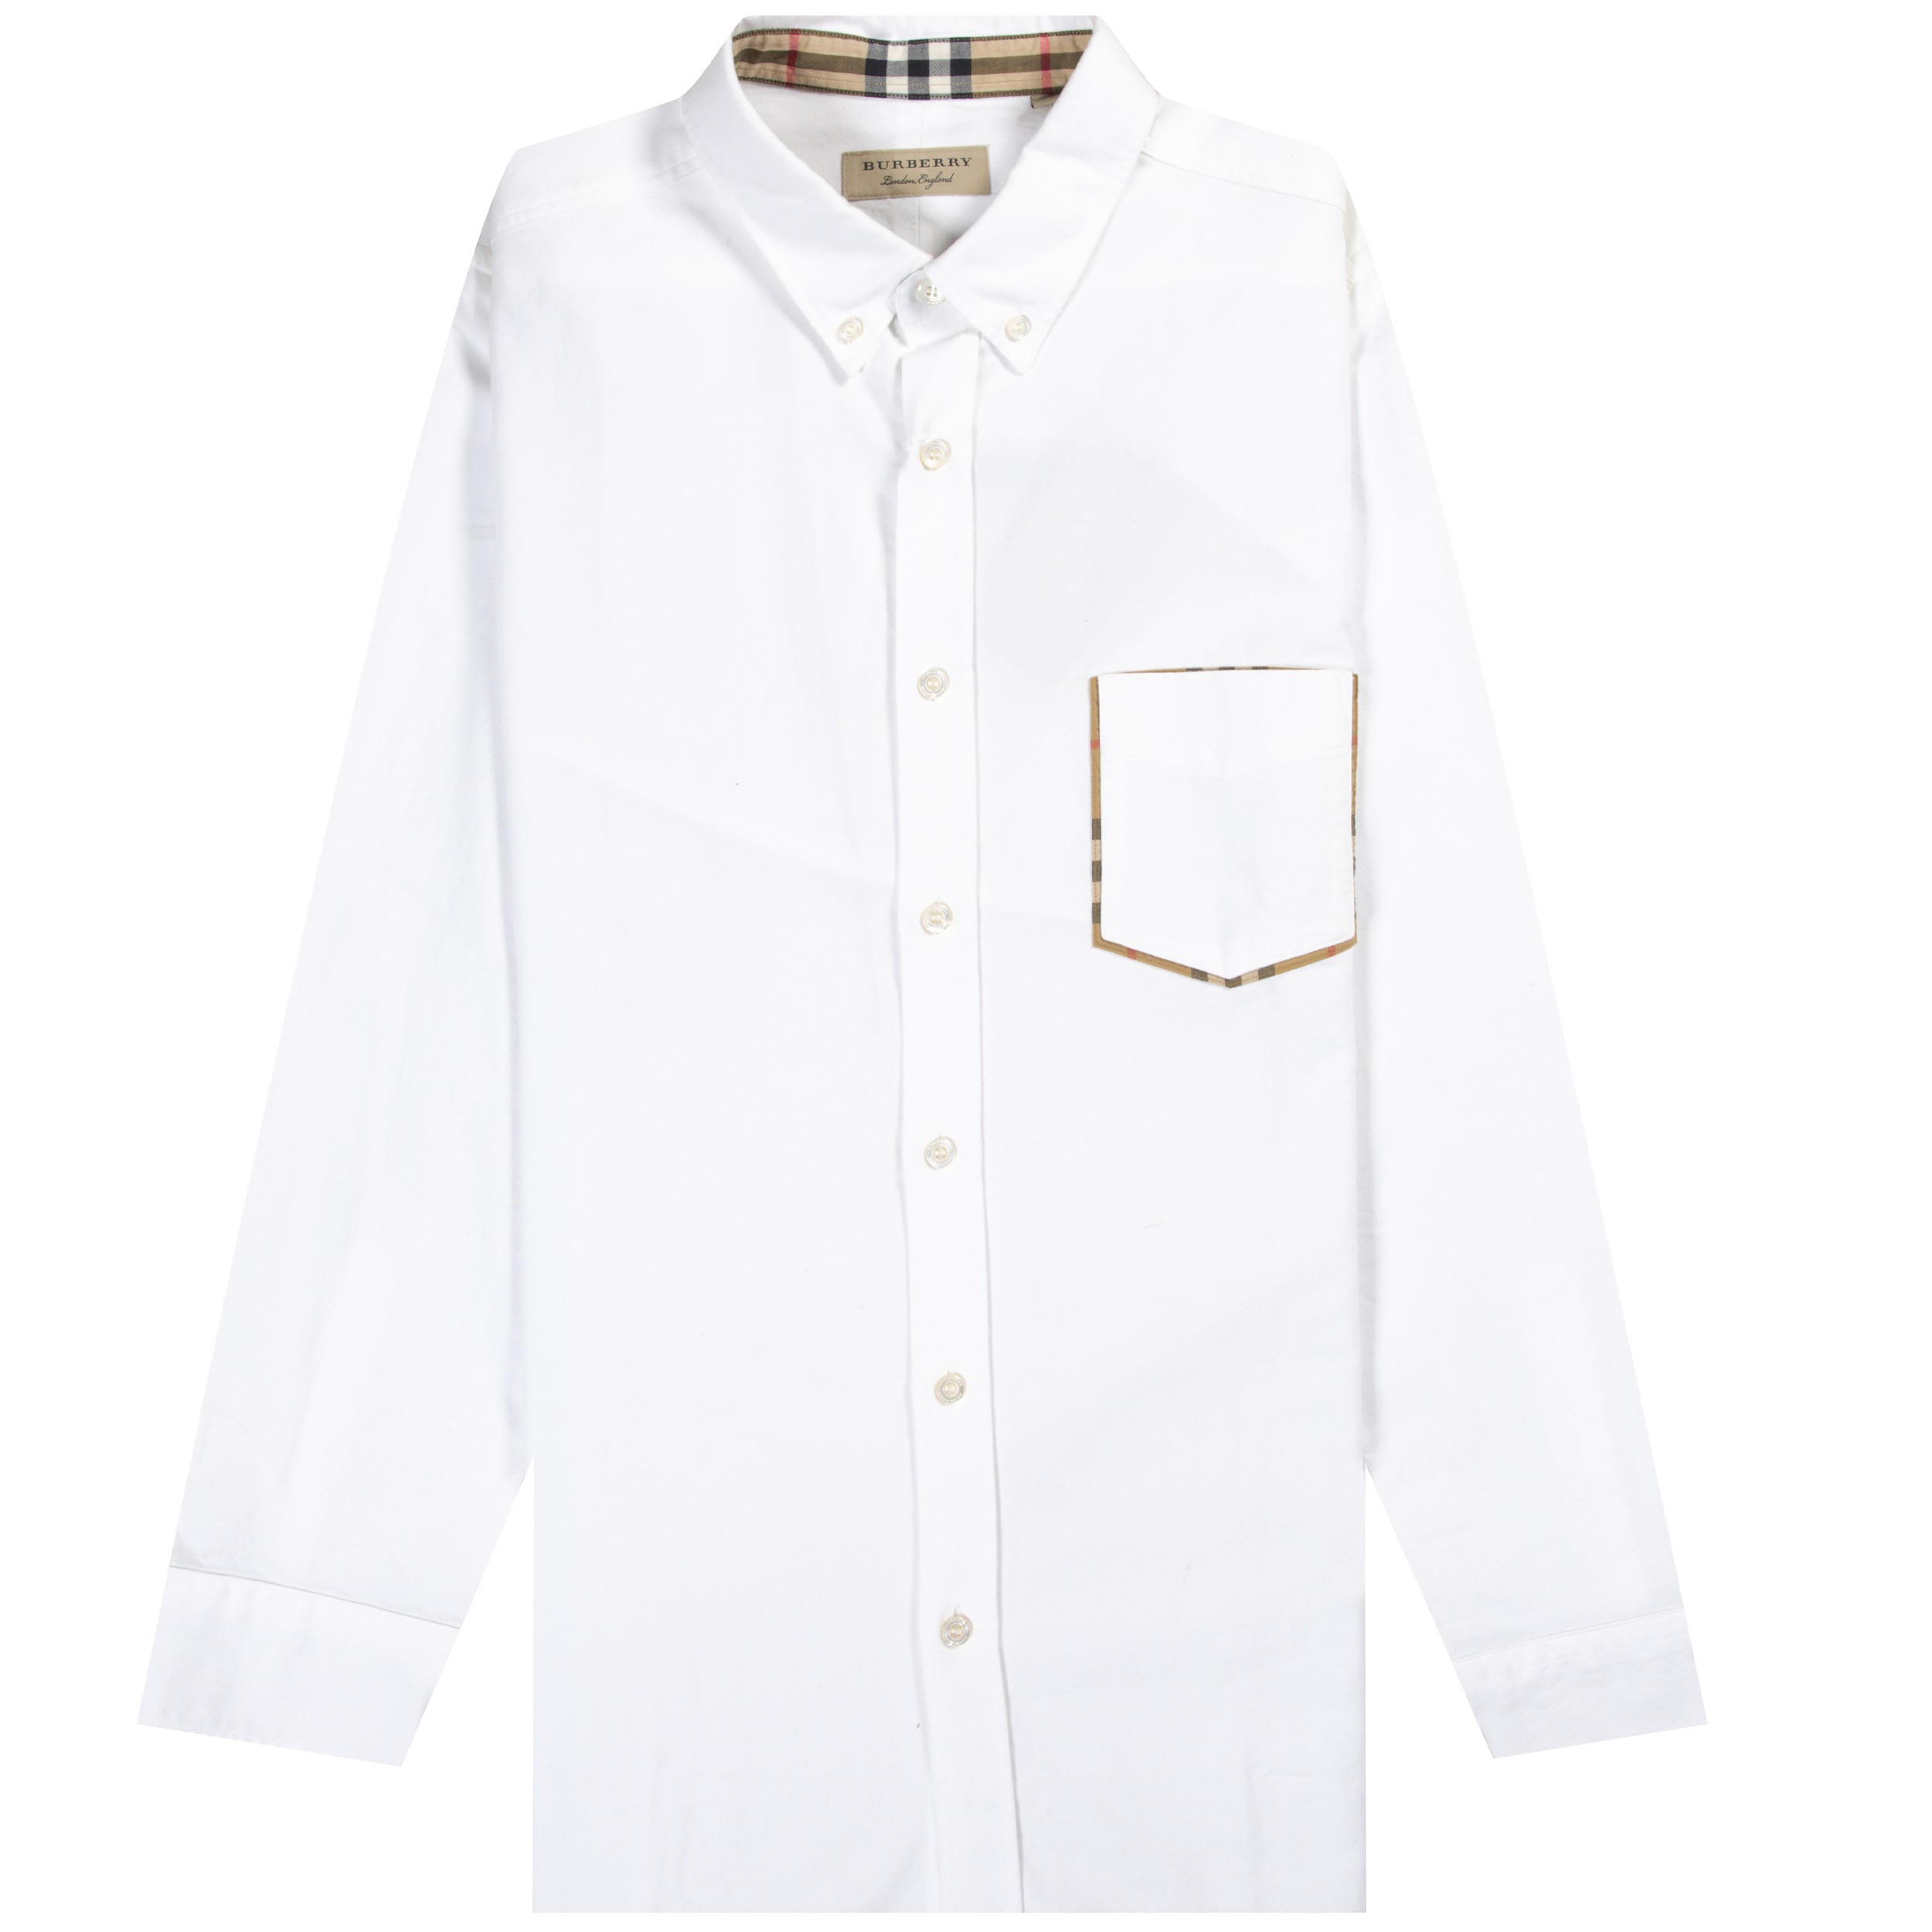 Burberry 'Harry' Check Cuff Cotton Oxford Shirt White